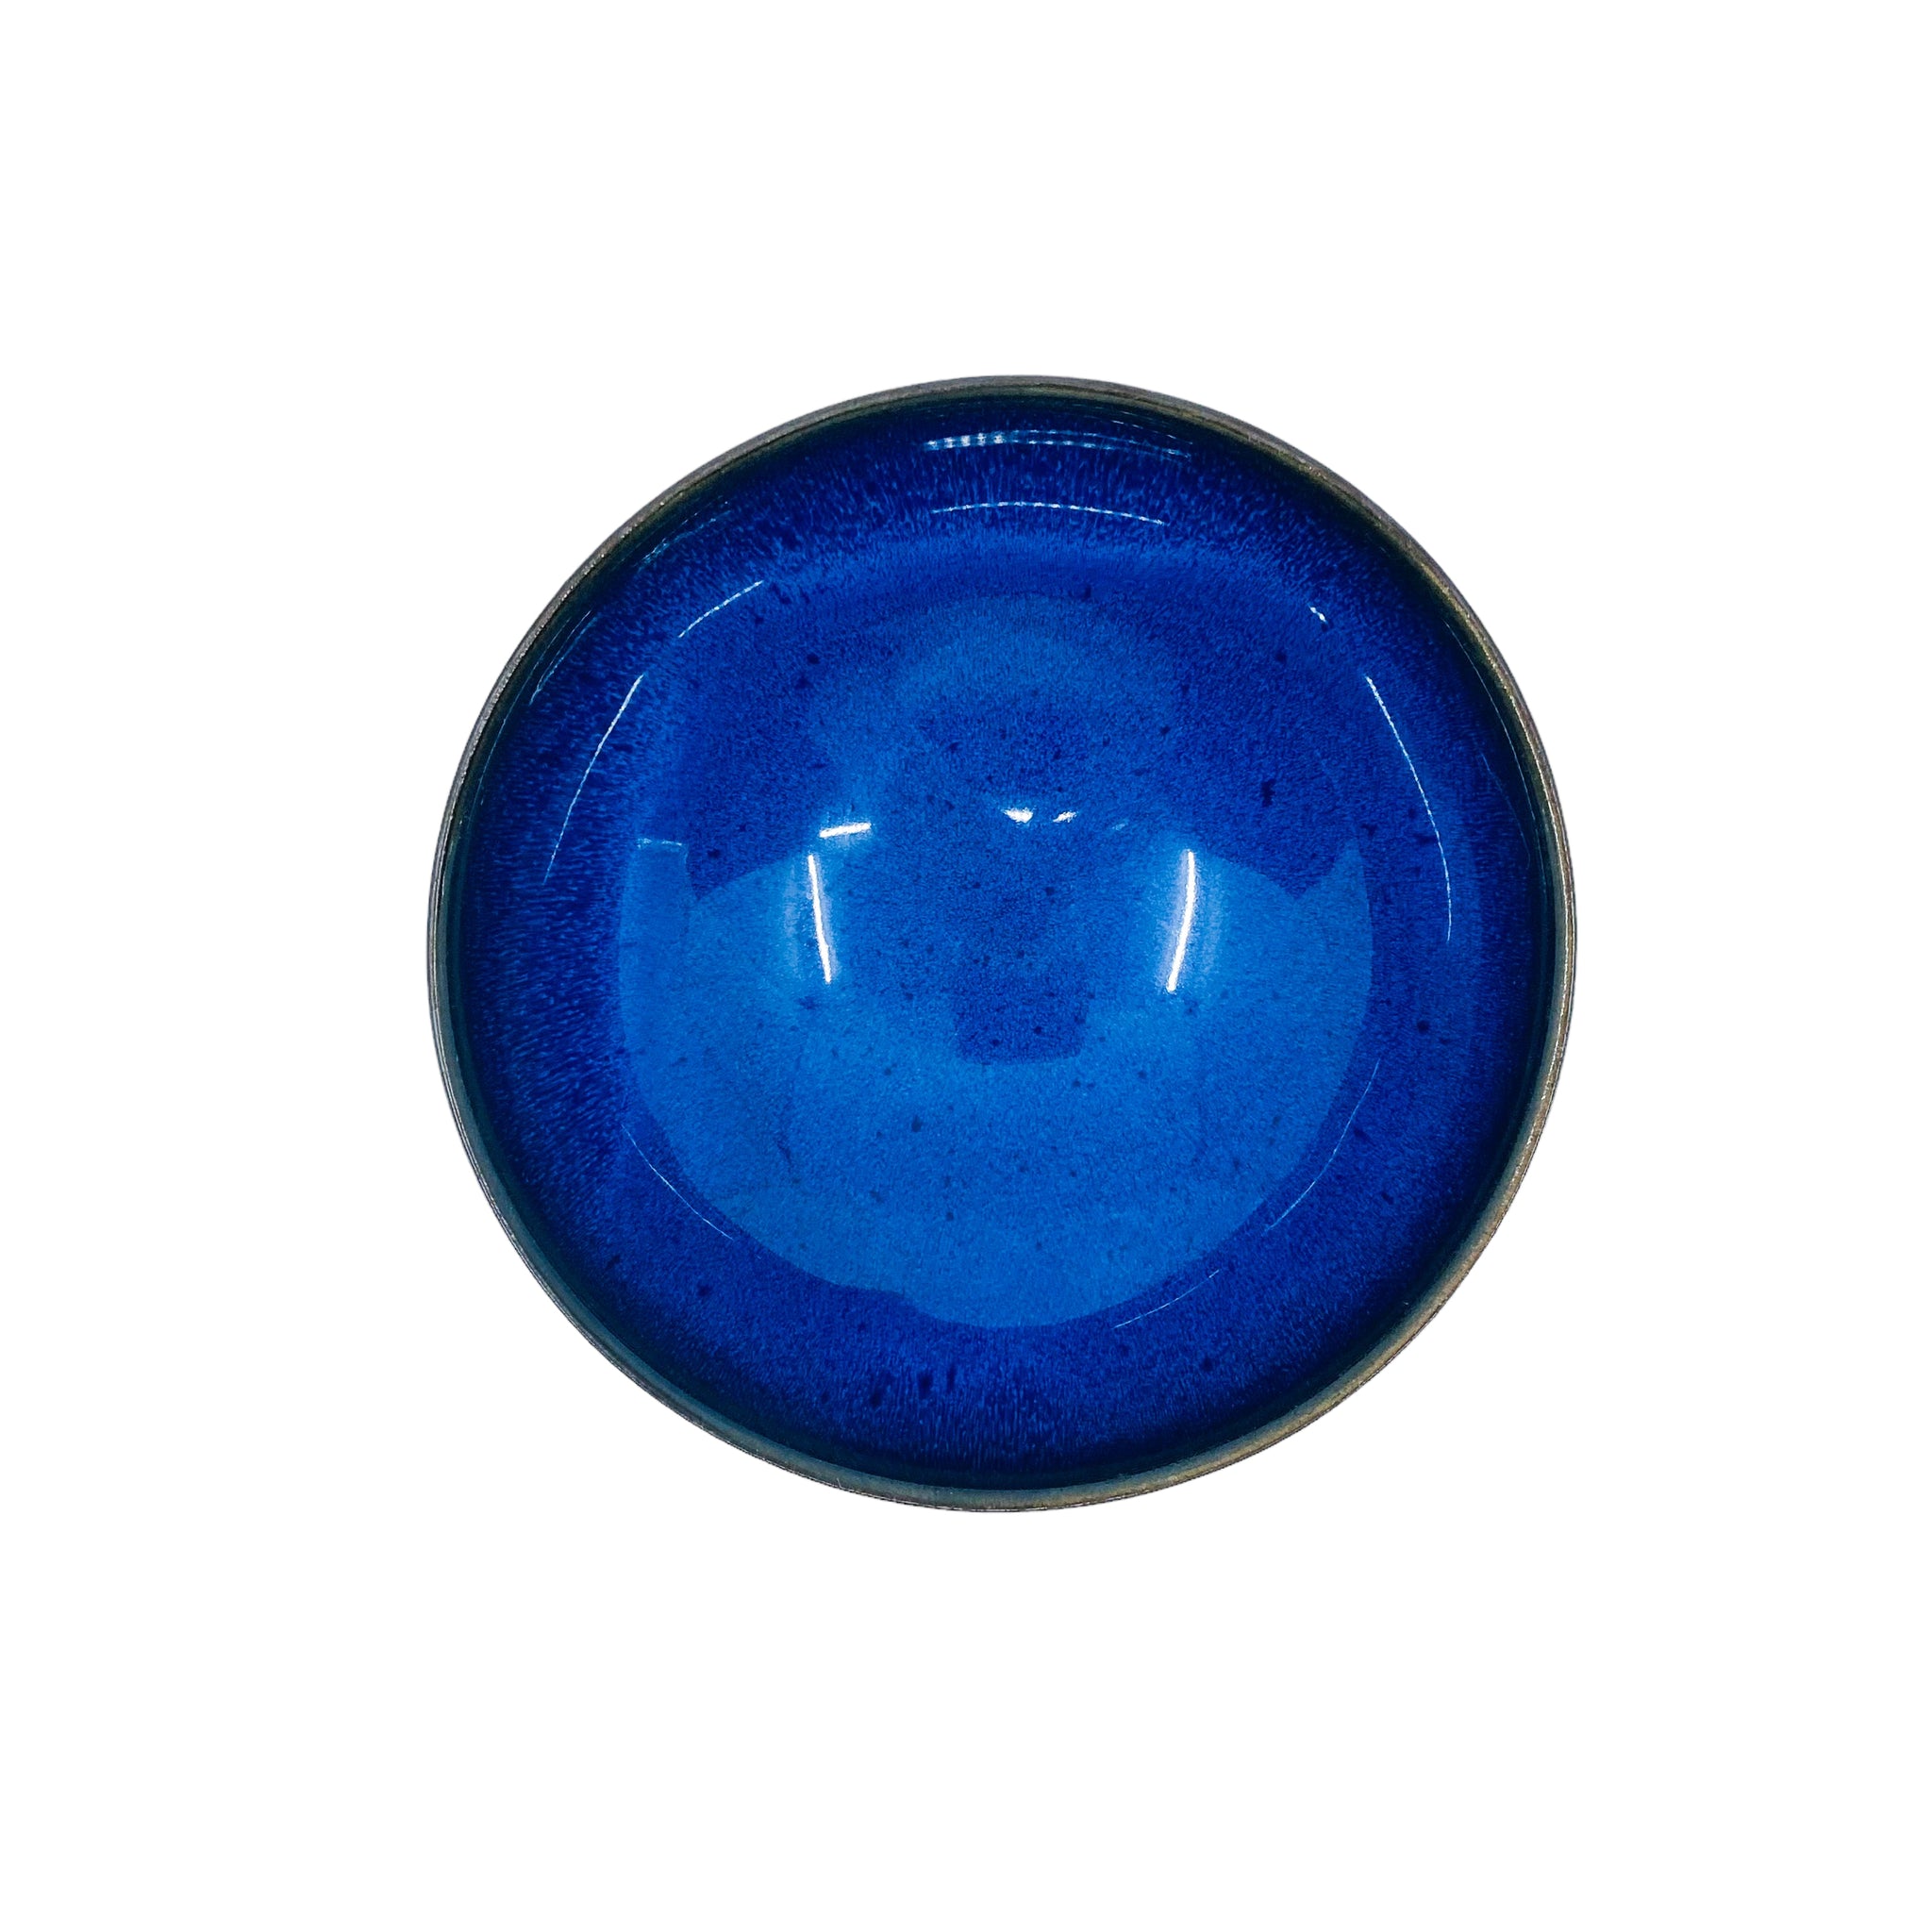 Vintage OMC Japan Blue Ceramic Glazed Bowl